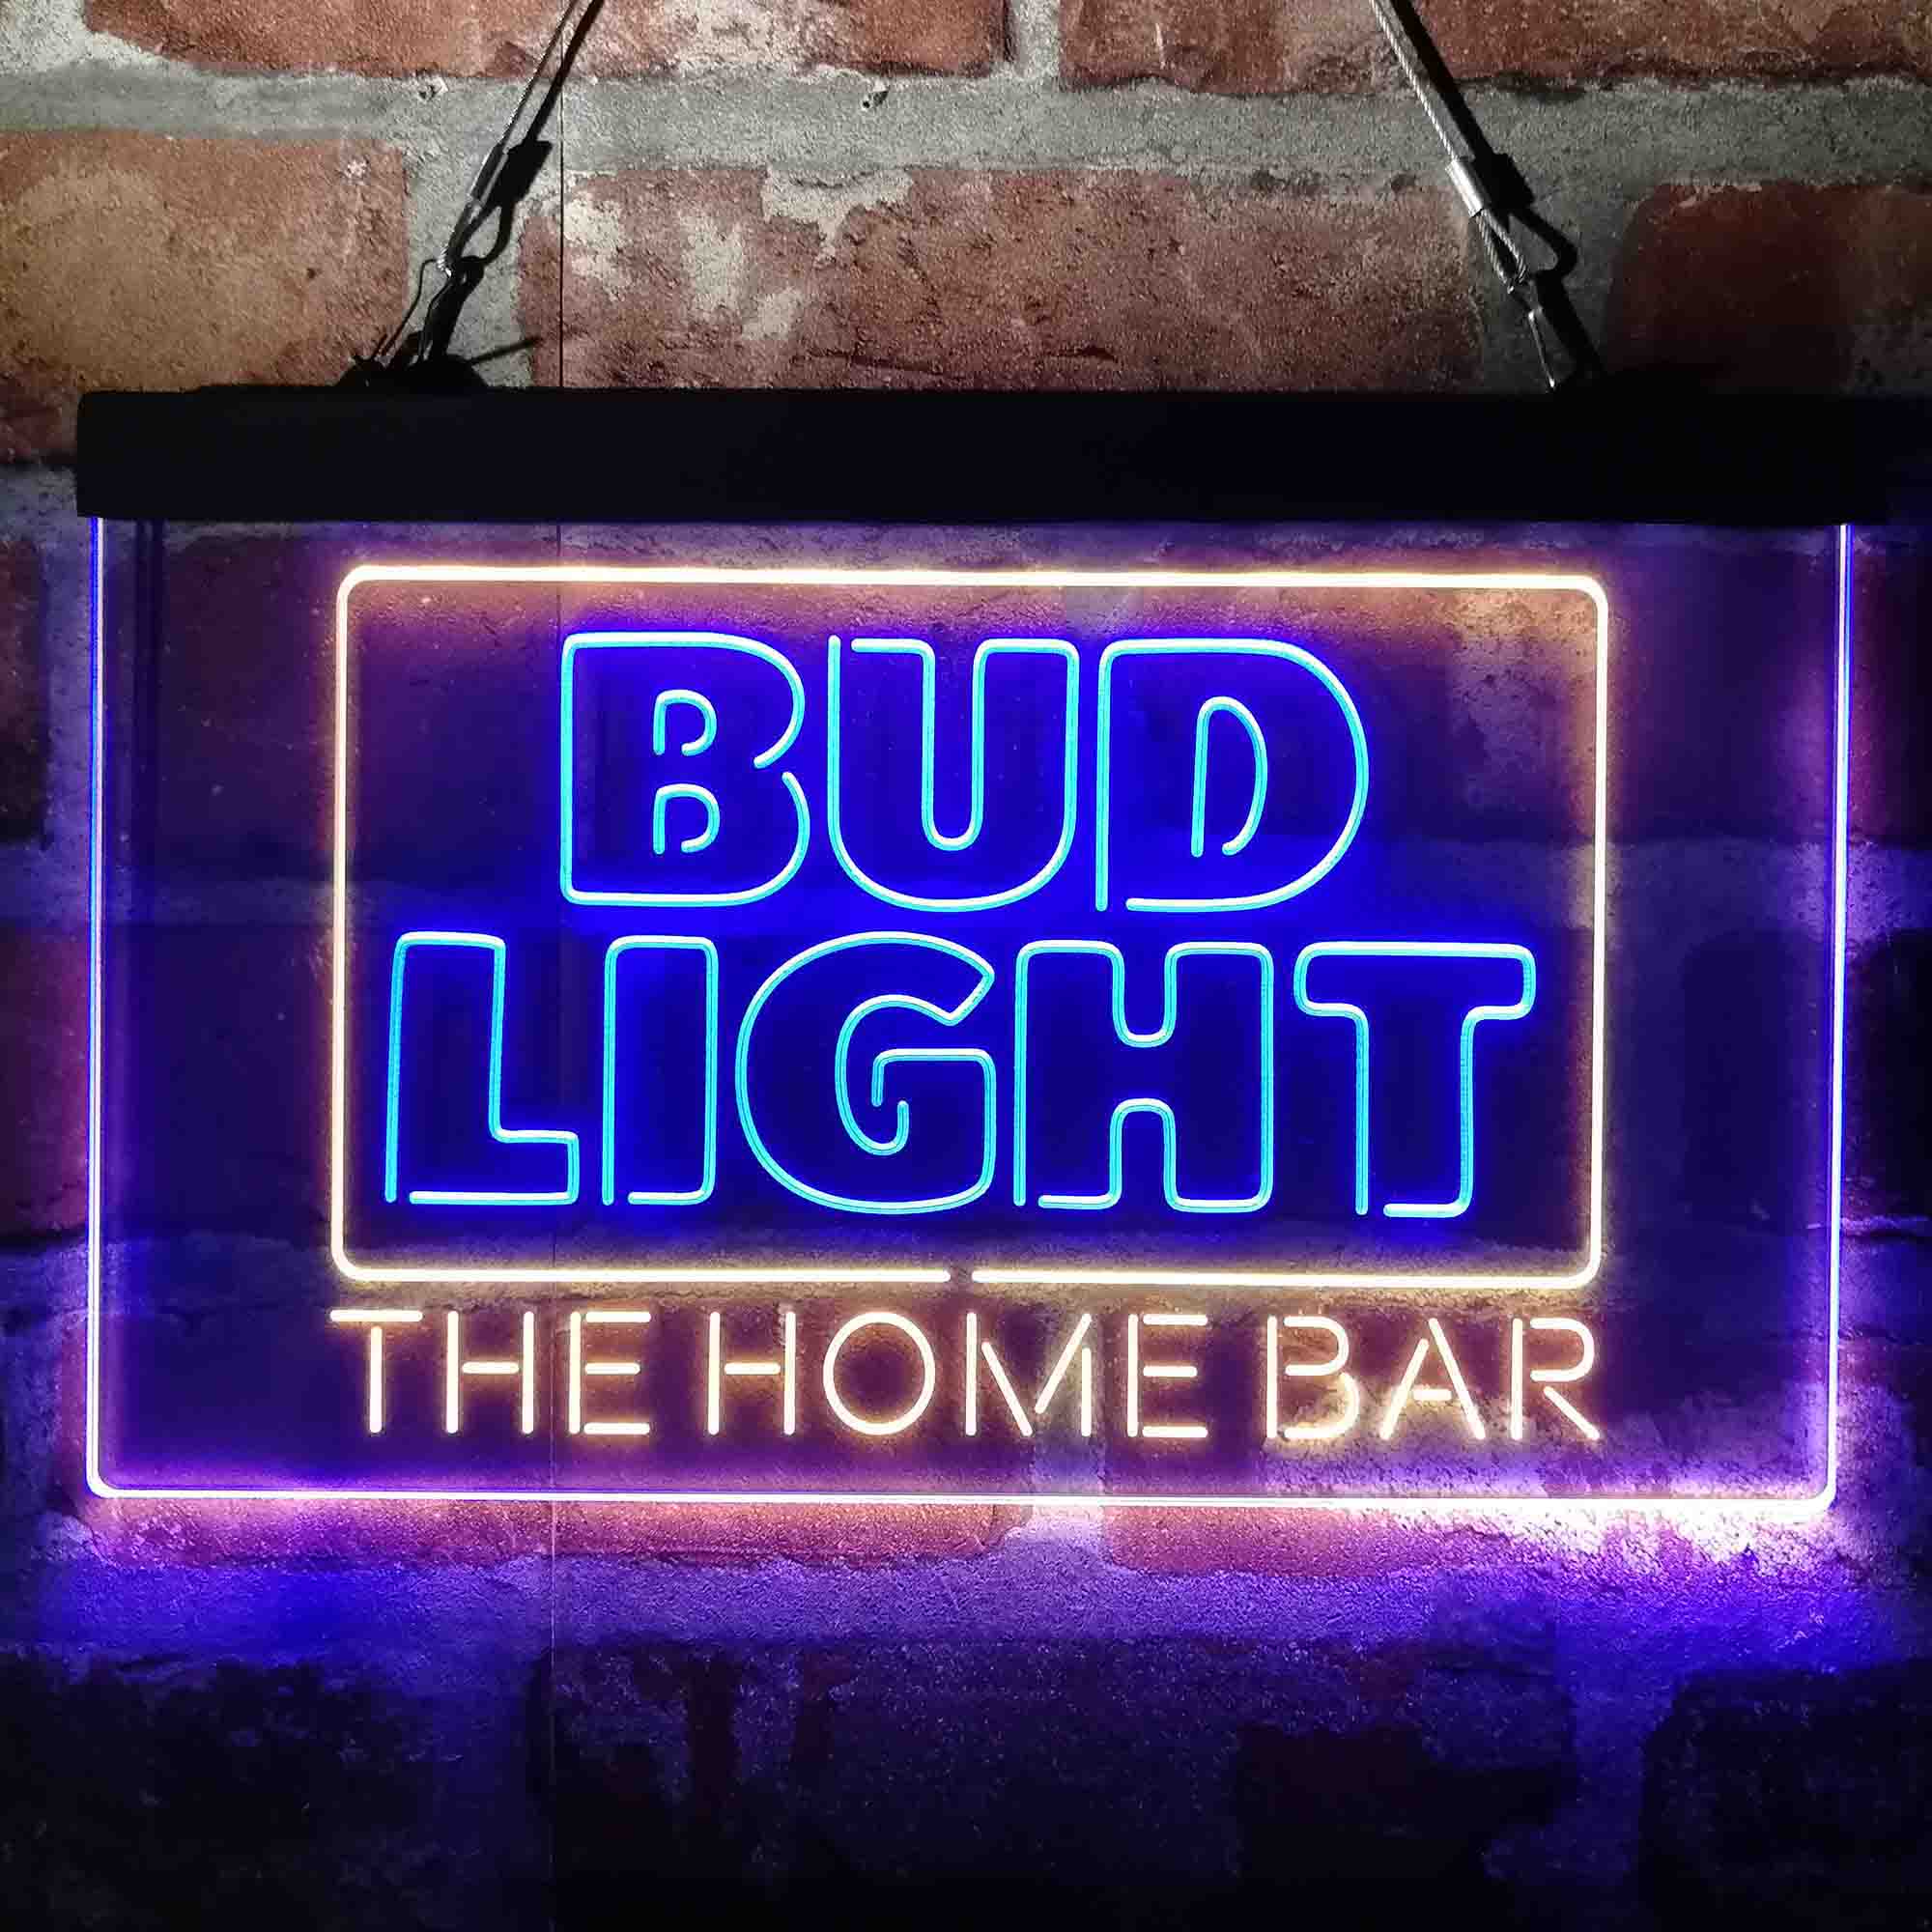 Personalized Bud Light Home Bar Neon-Like LED Sign - Custom Wall Decor Gift